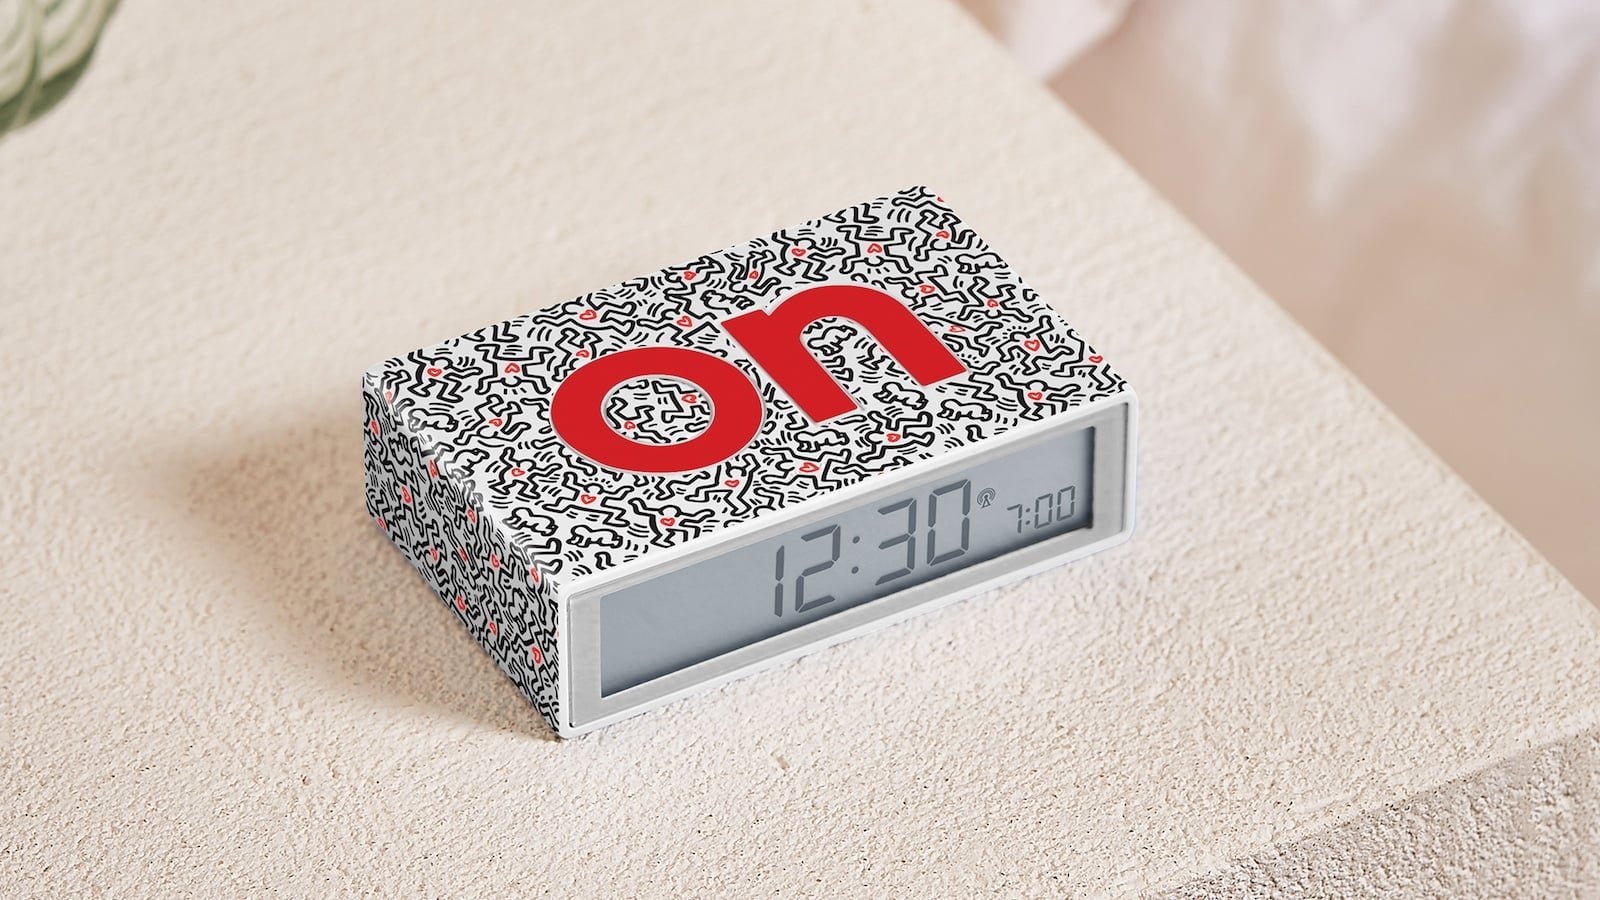 Lexon x Keith Haring collection includes a flip alarm clock, a portable speaker & more